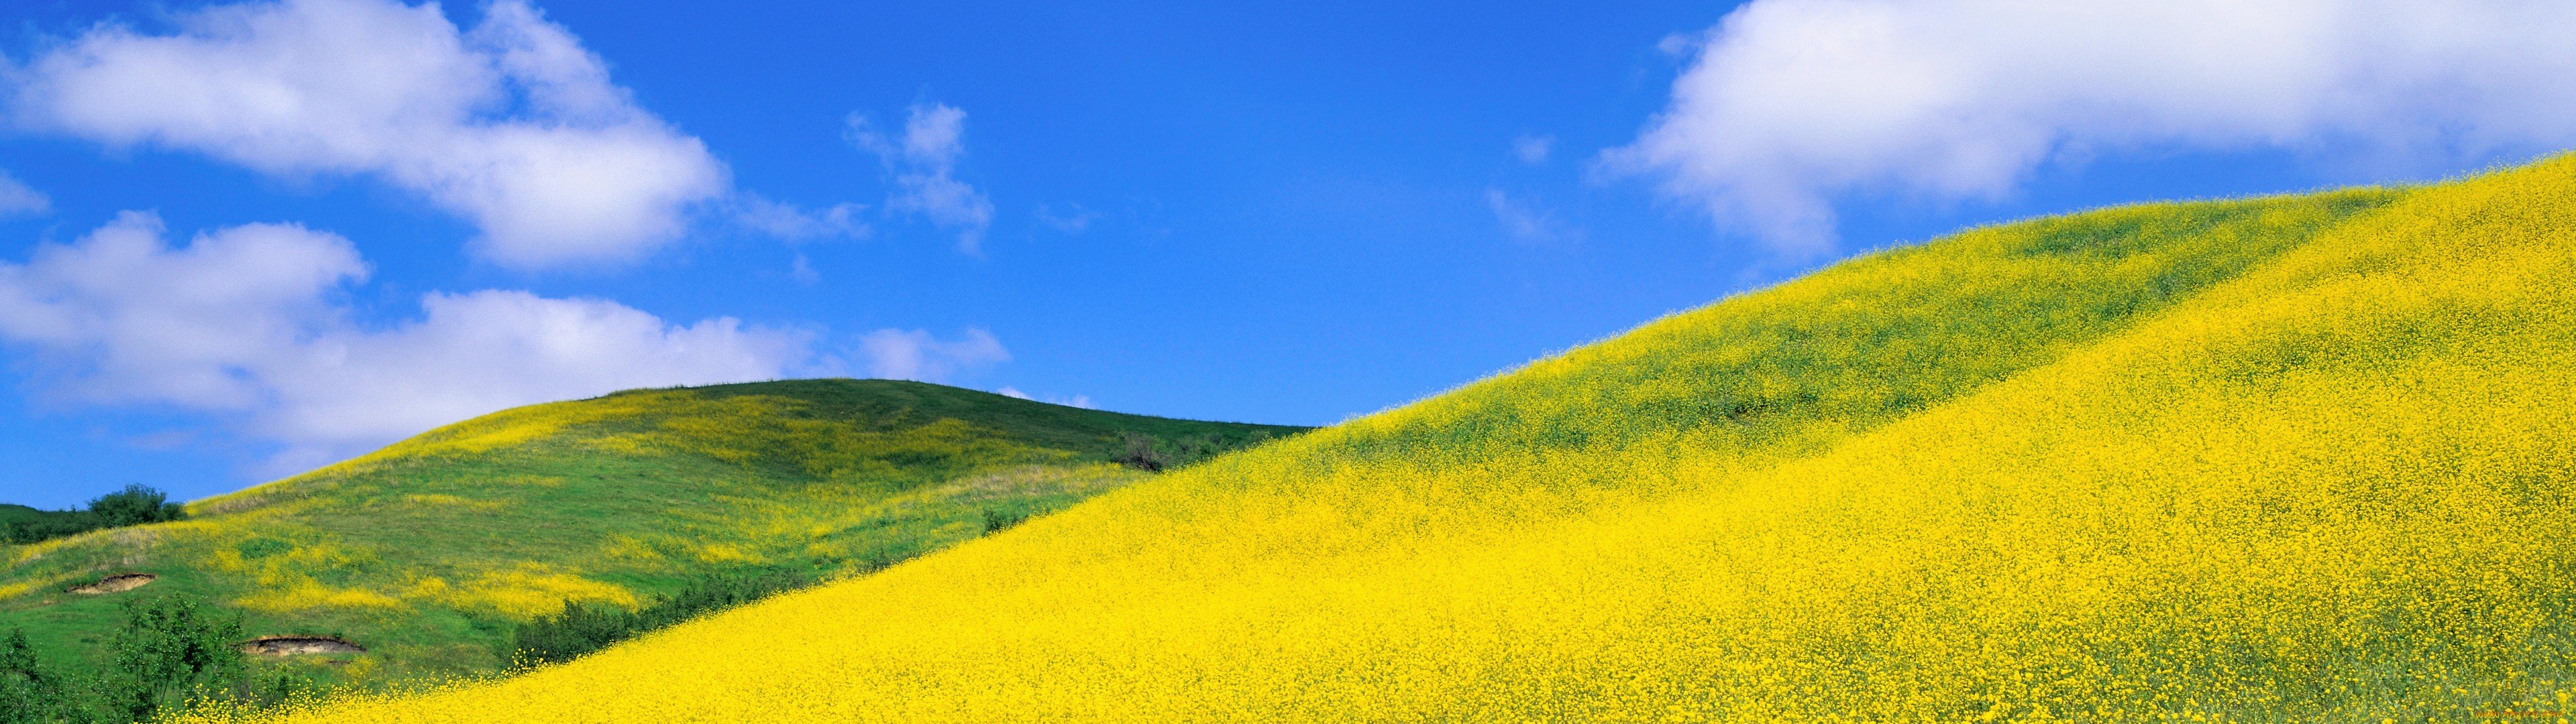 filed, Grass, Yellow, Nature, Sky, Blue Wallpaper